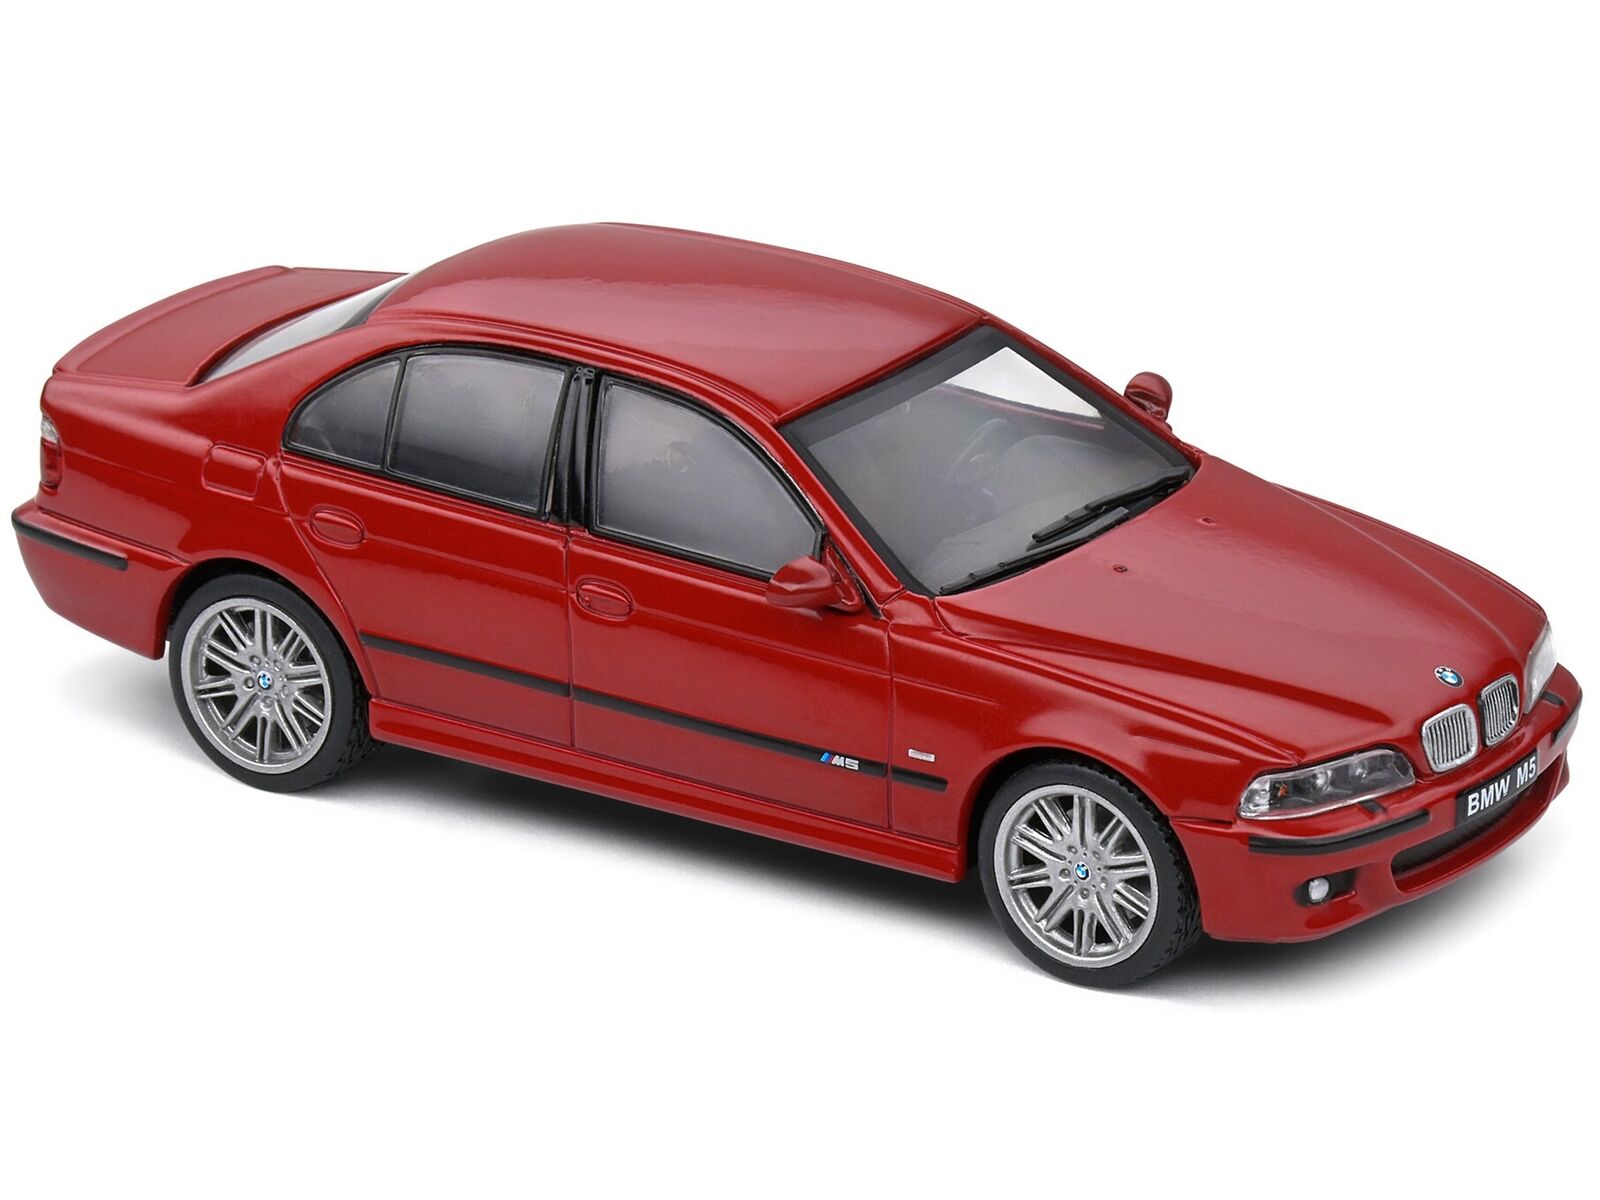 2003 BMW E39 M5 Imola Red 1/43 Diecast Model Car